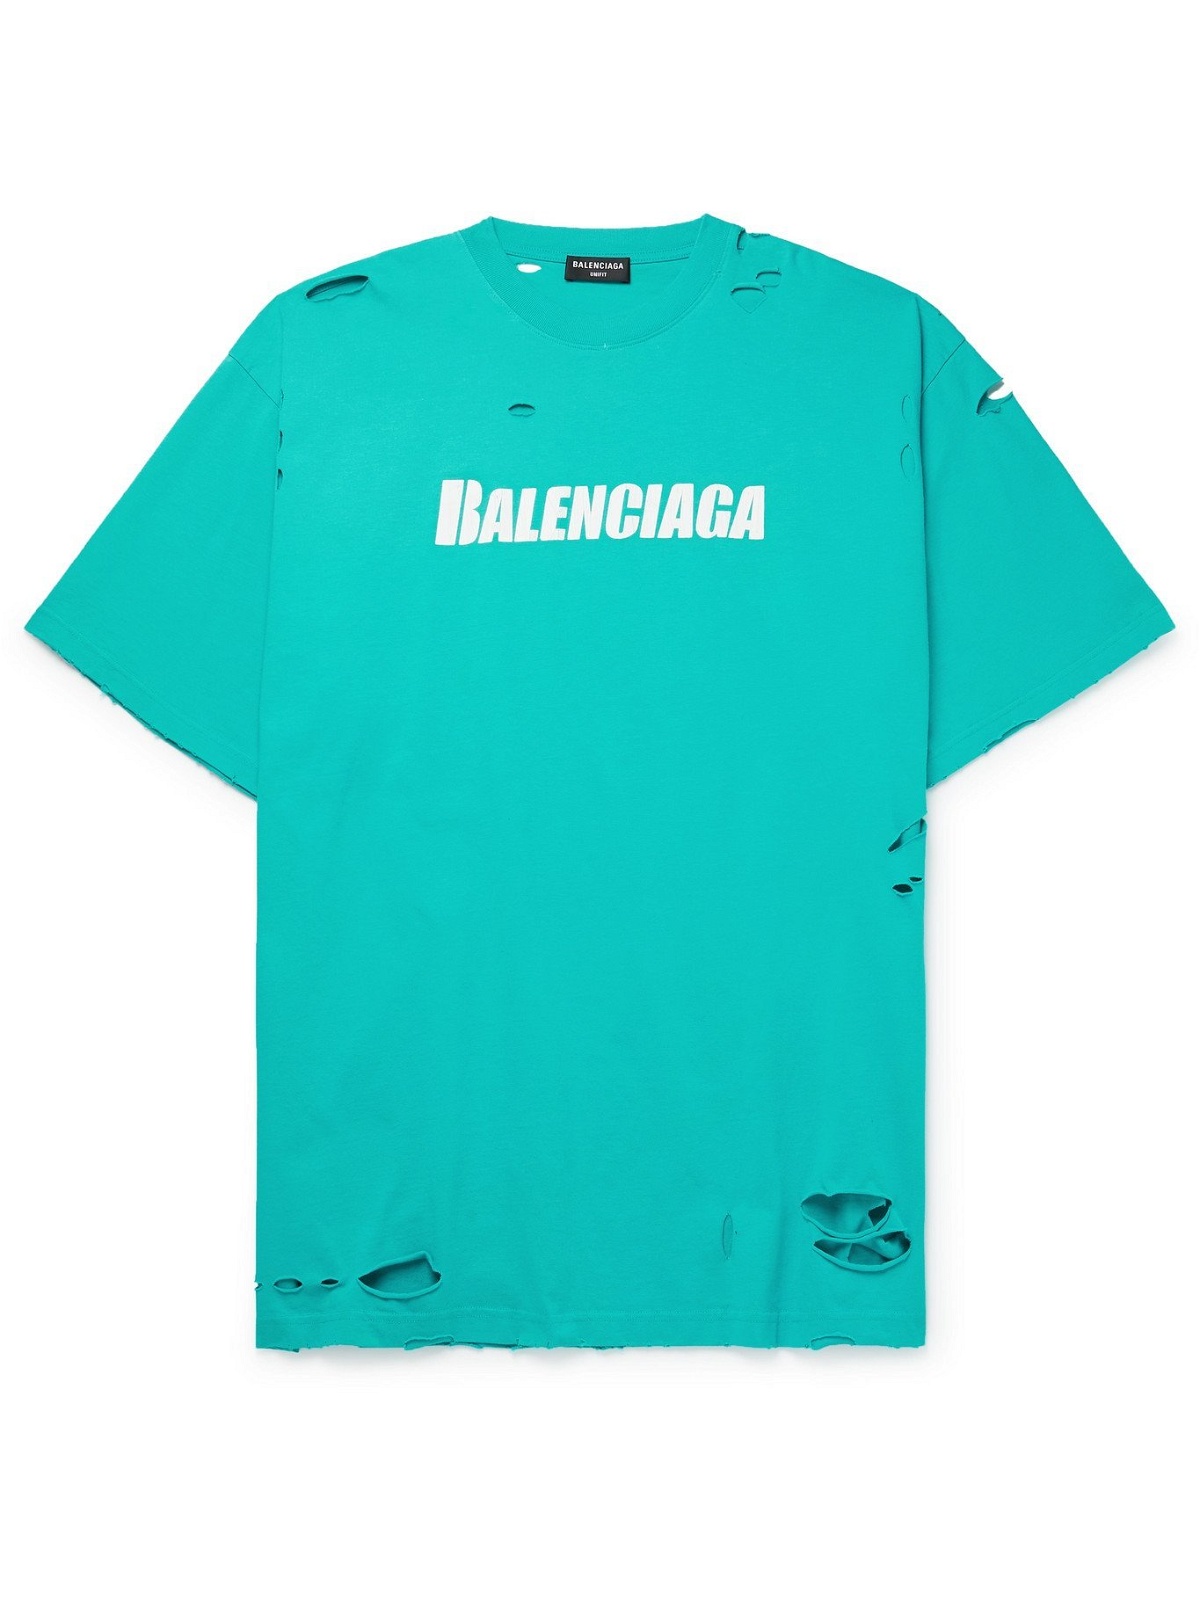 BALENCIAGA  Oversized Distressed LogoPrint Organic CottonJersey TShirt   Blue  M Balenciaga